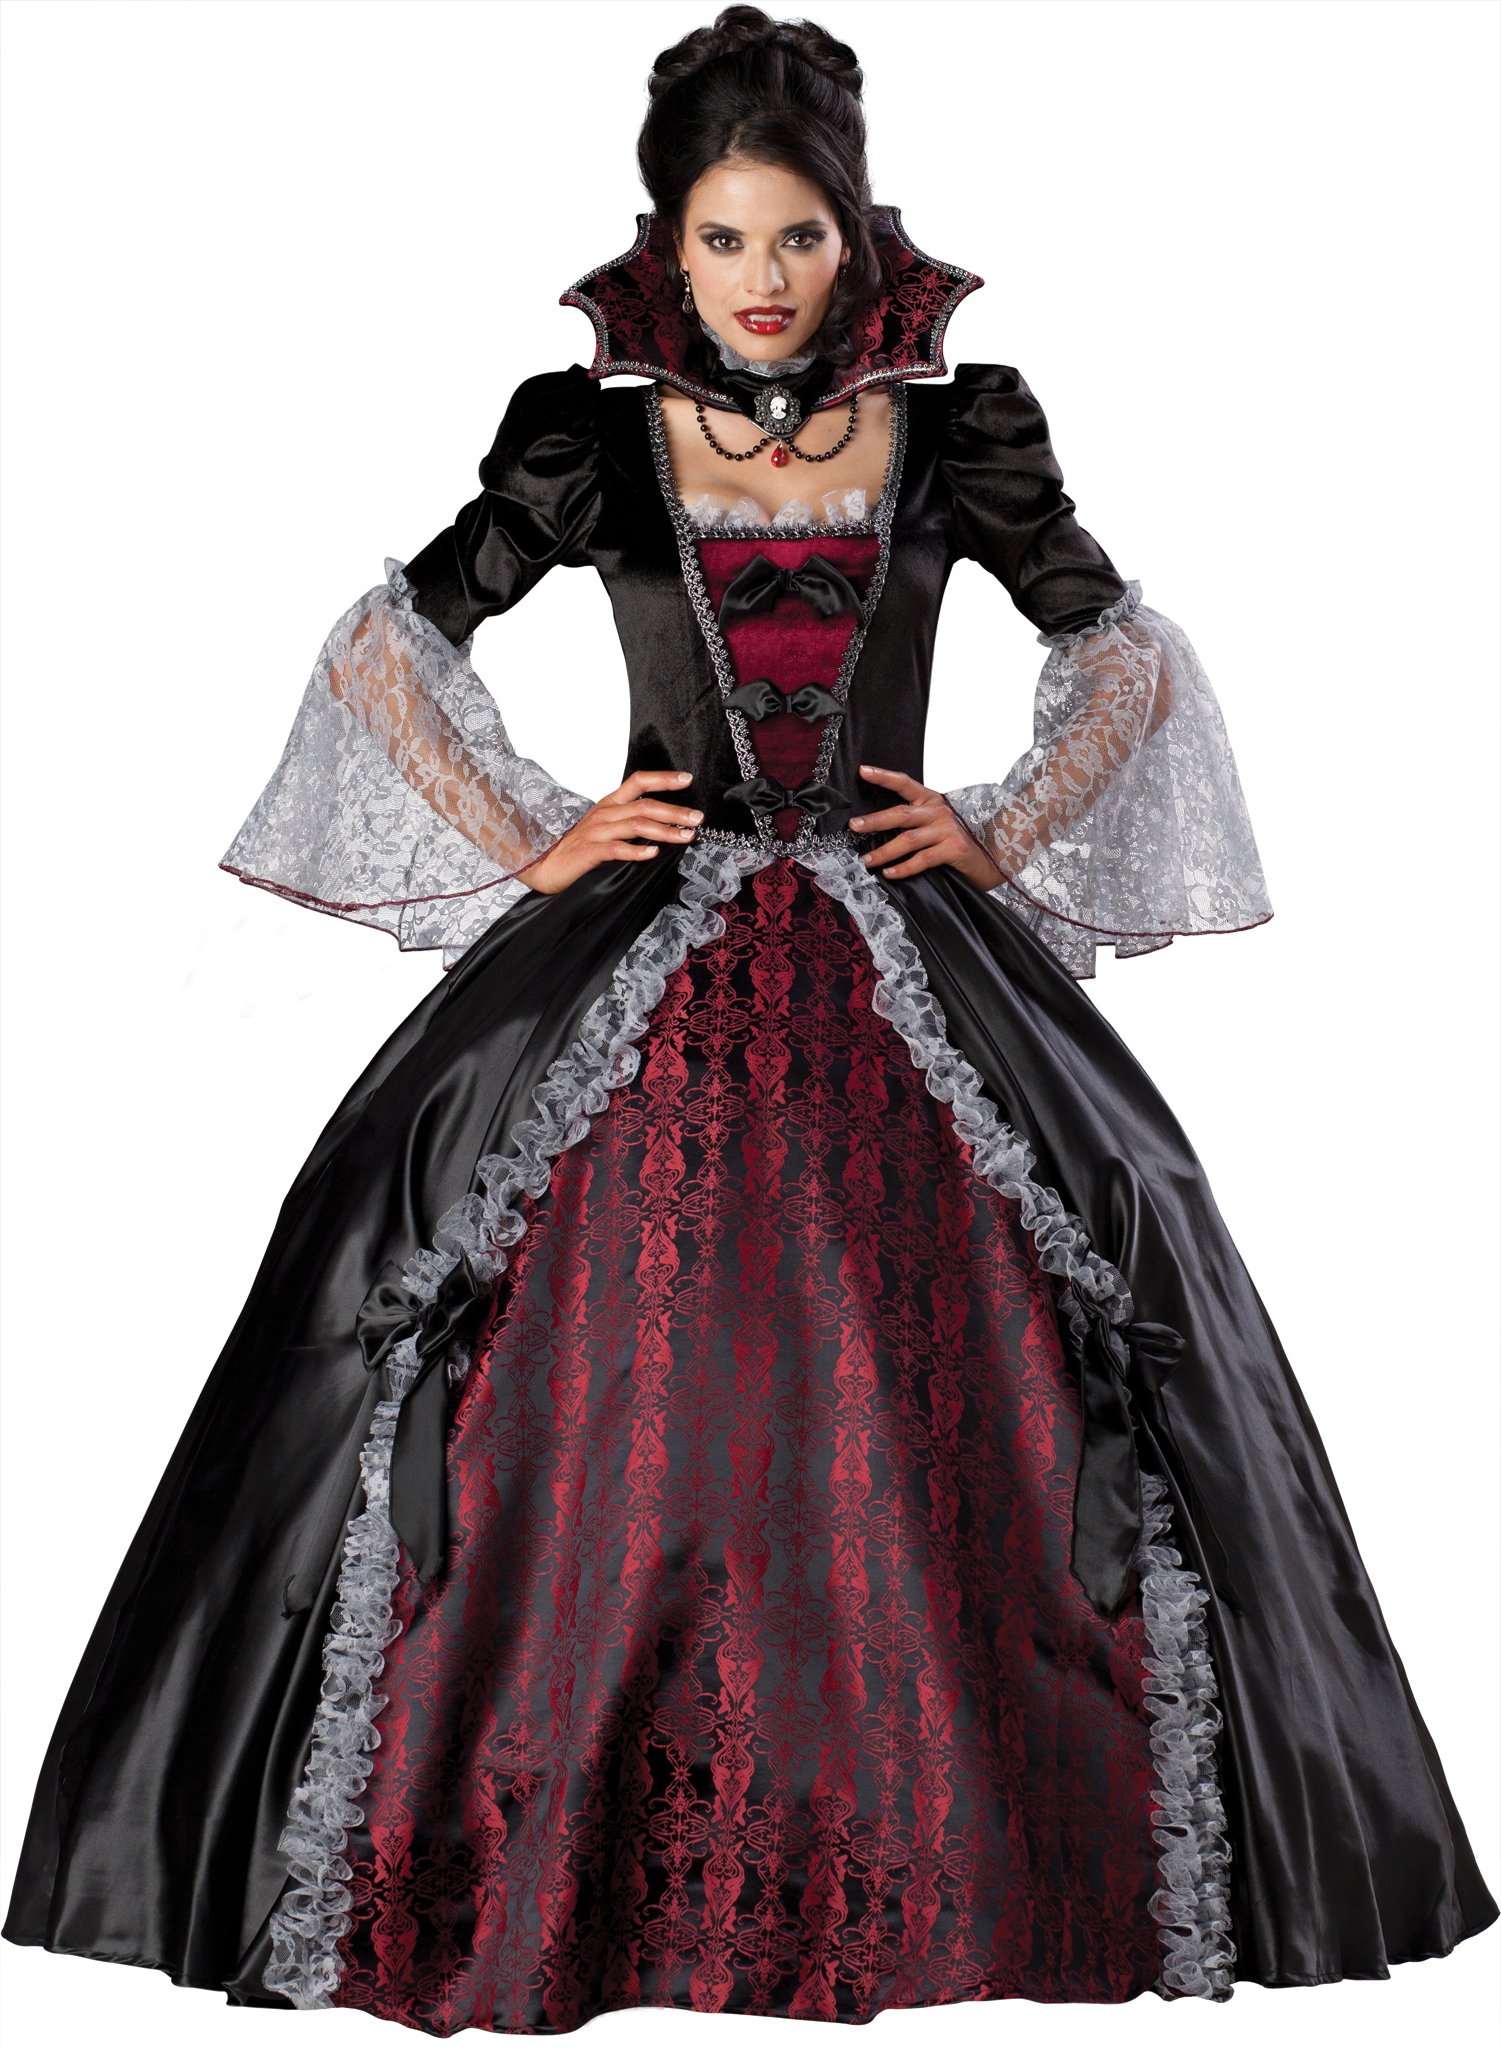 Vampiress of Versailles Elite Adult Costume - Click Image to Close